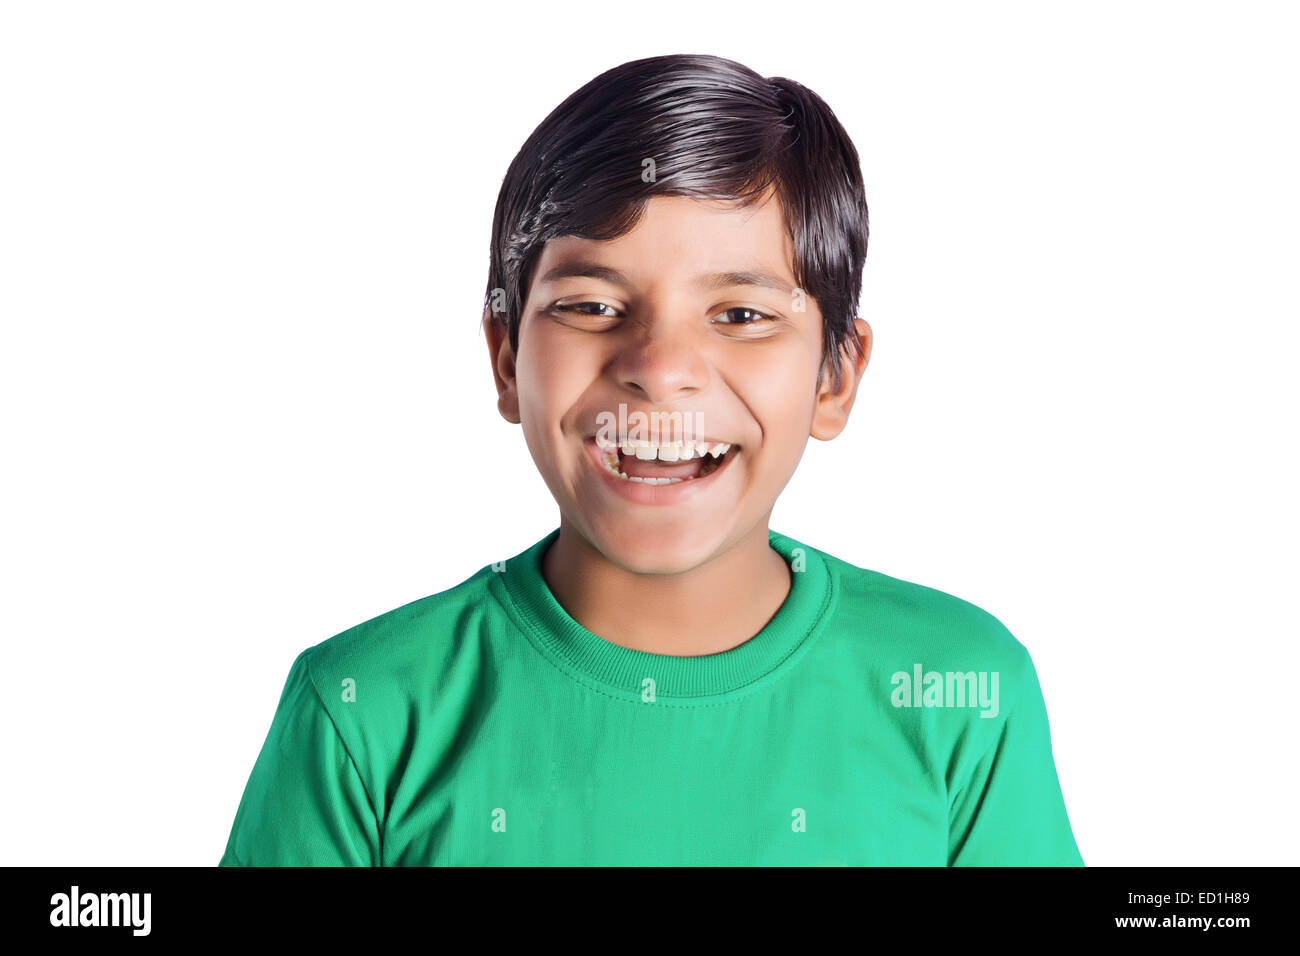 1 indian child boy fun Stock Photo